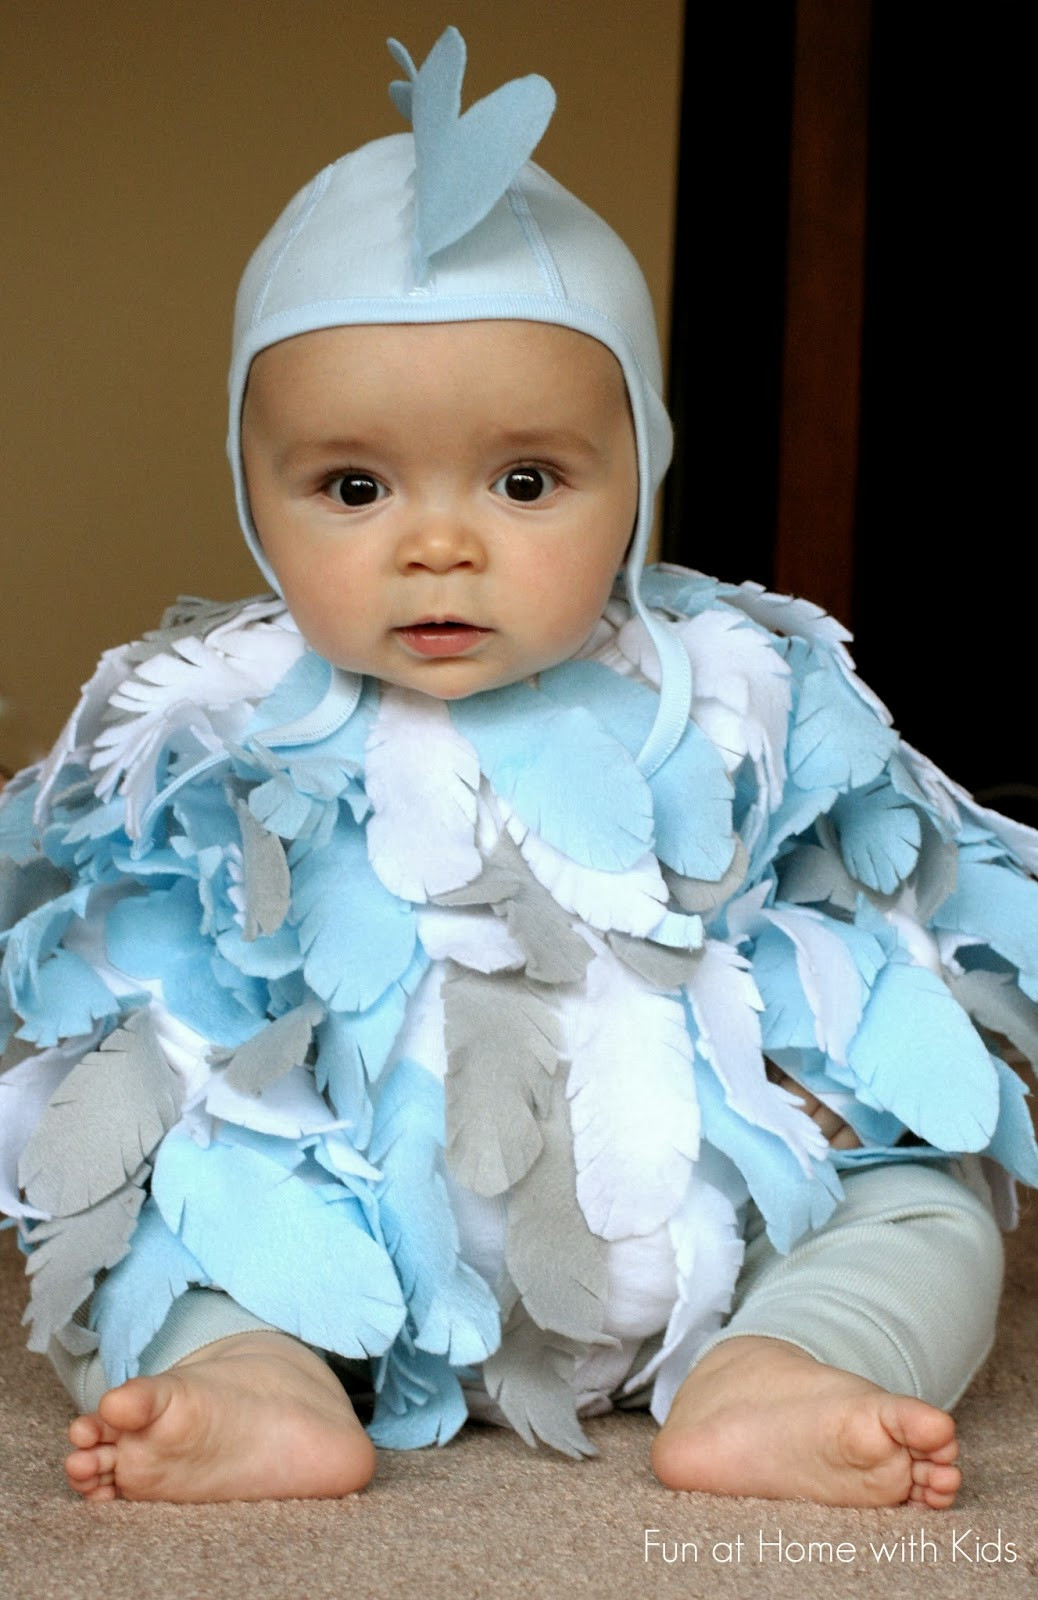 Best ideas about DIY Newborn Halloween Costumes
. Save or Pin DIY No Sew Baby Chicken Halloween Costume Now.